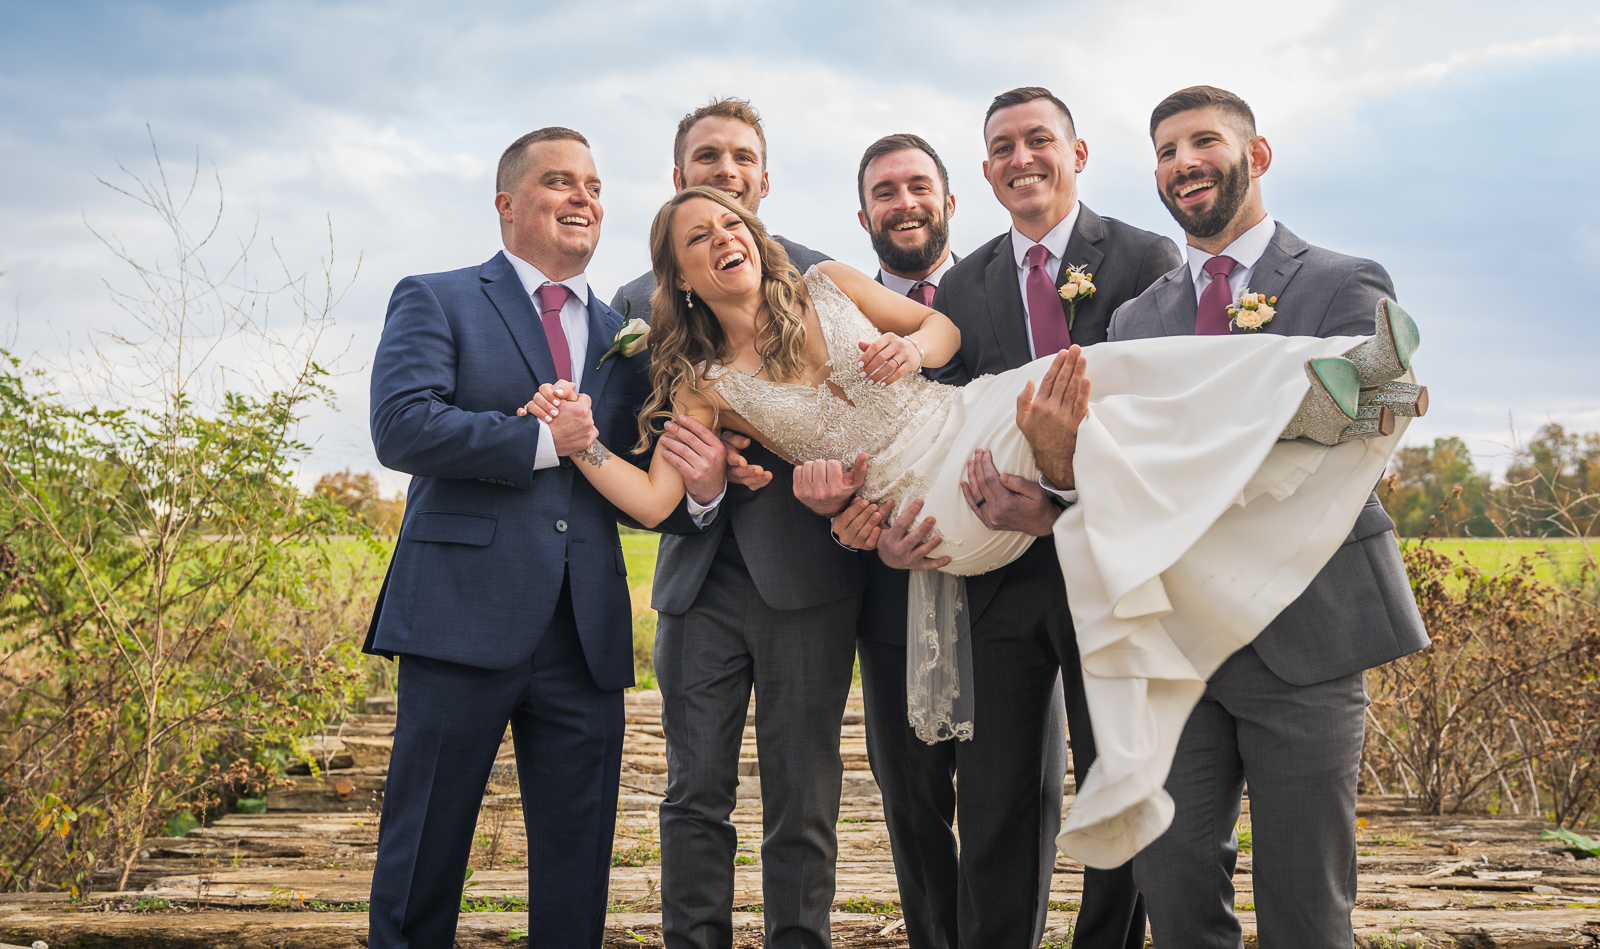 Bride with groomsmen, bridal party portrait, fun bridal party portrait, candid, laugh, fall wedding, rustic outdoor wedding ceremony at White Birch Barn